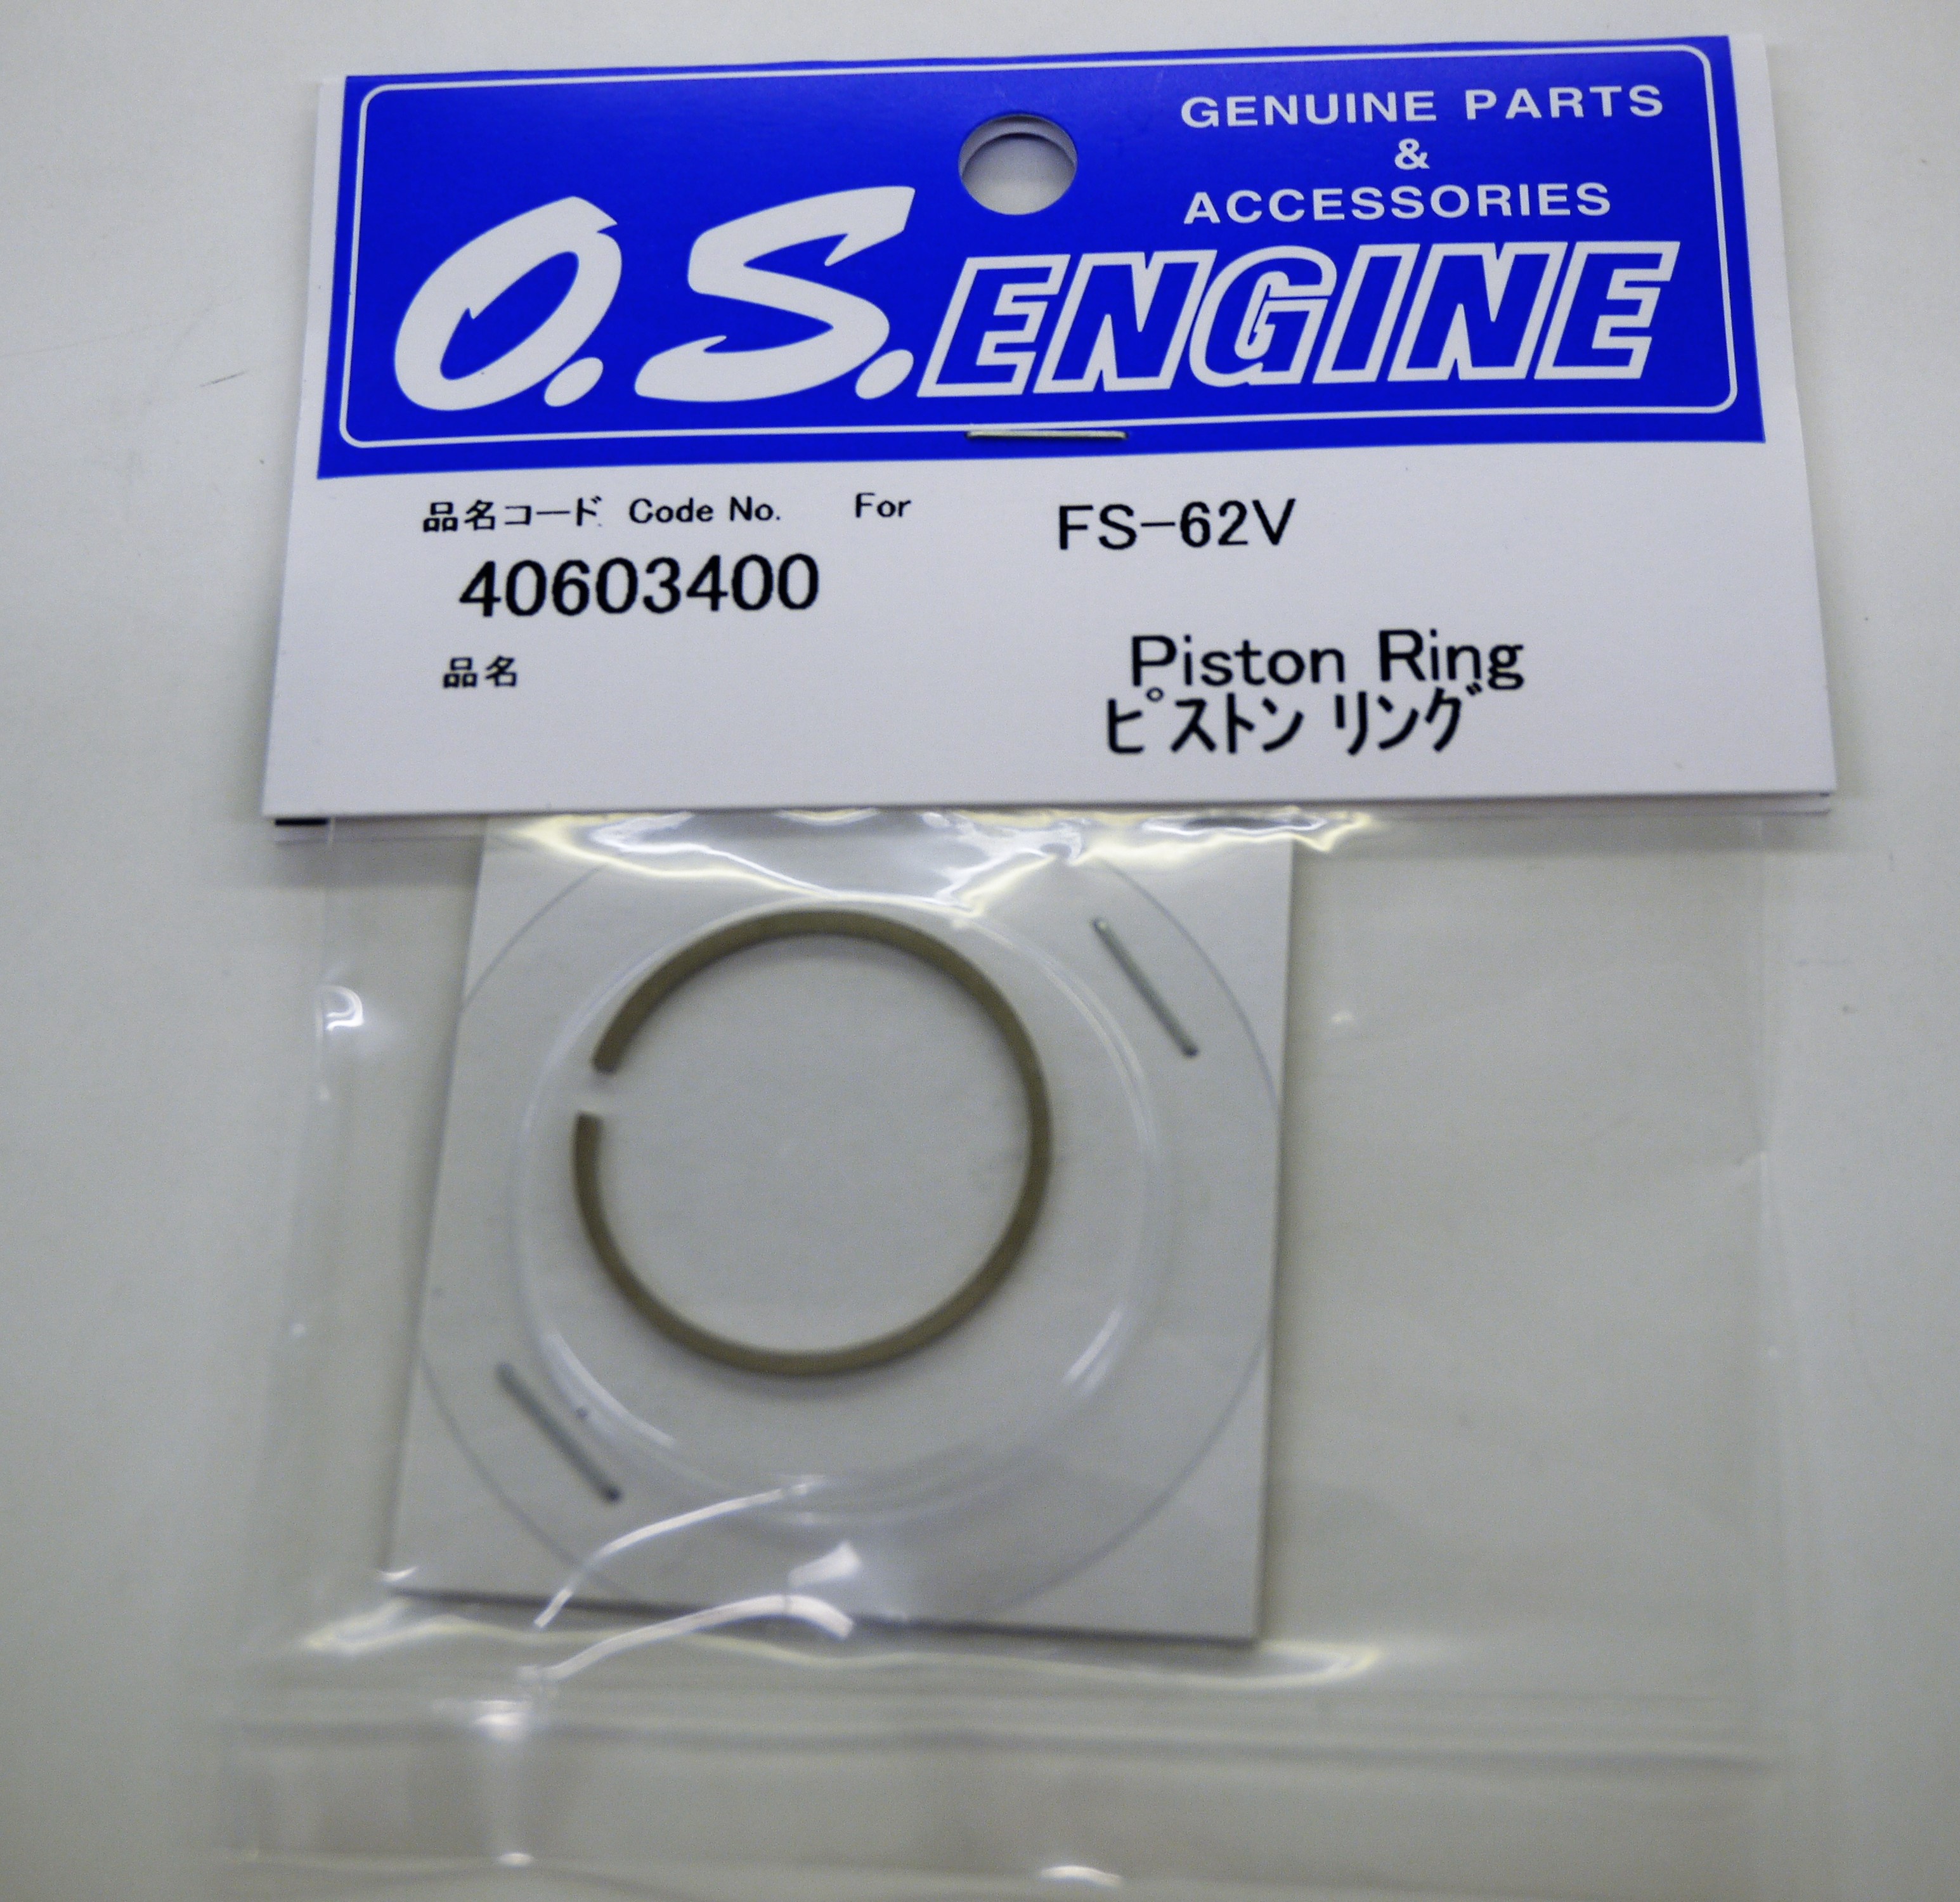 Piston Ring : RC Japan | Radio Control Aircraft | Car